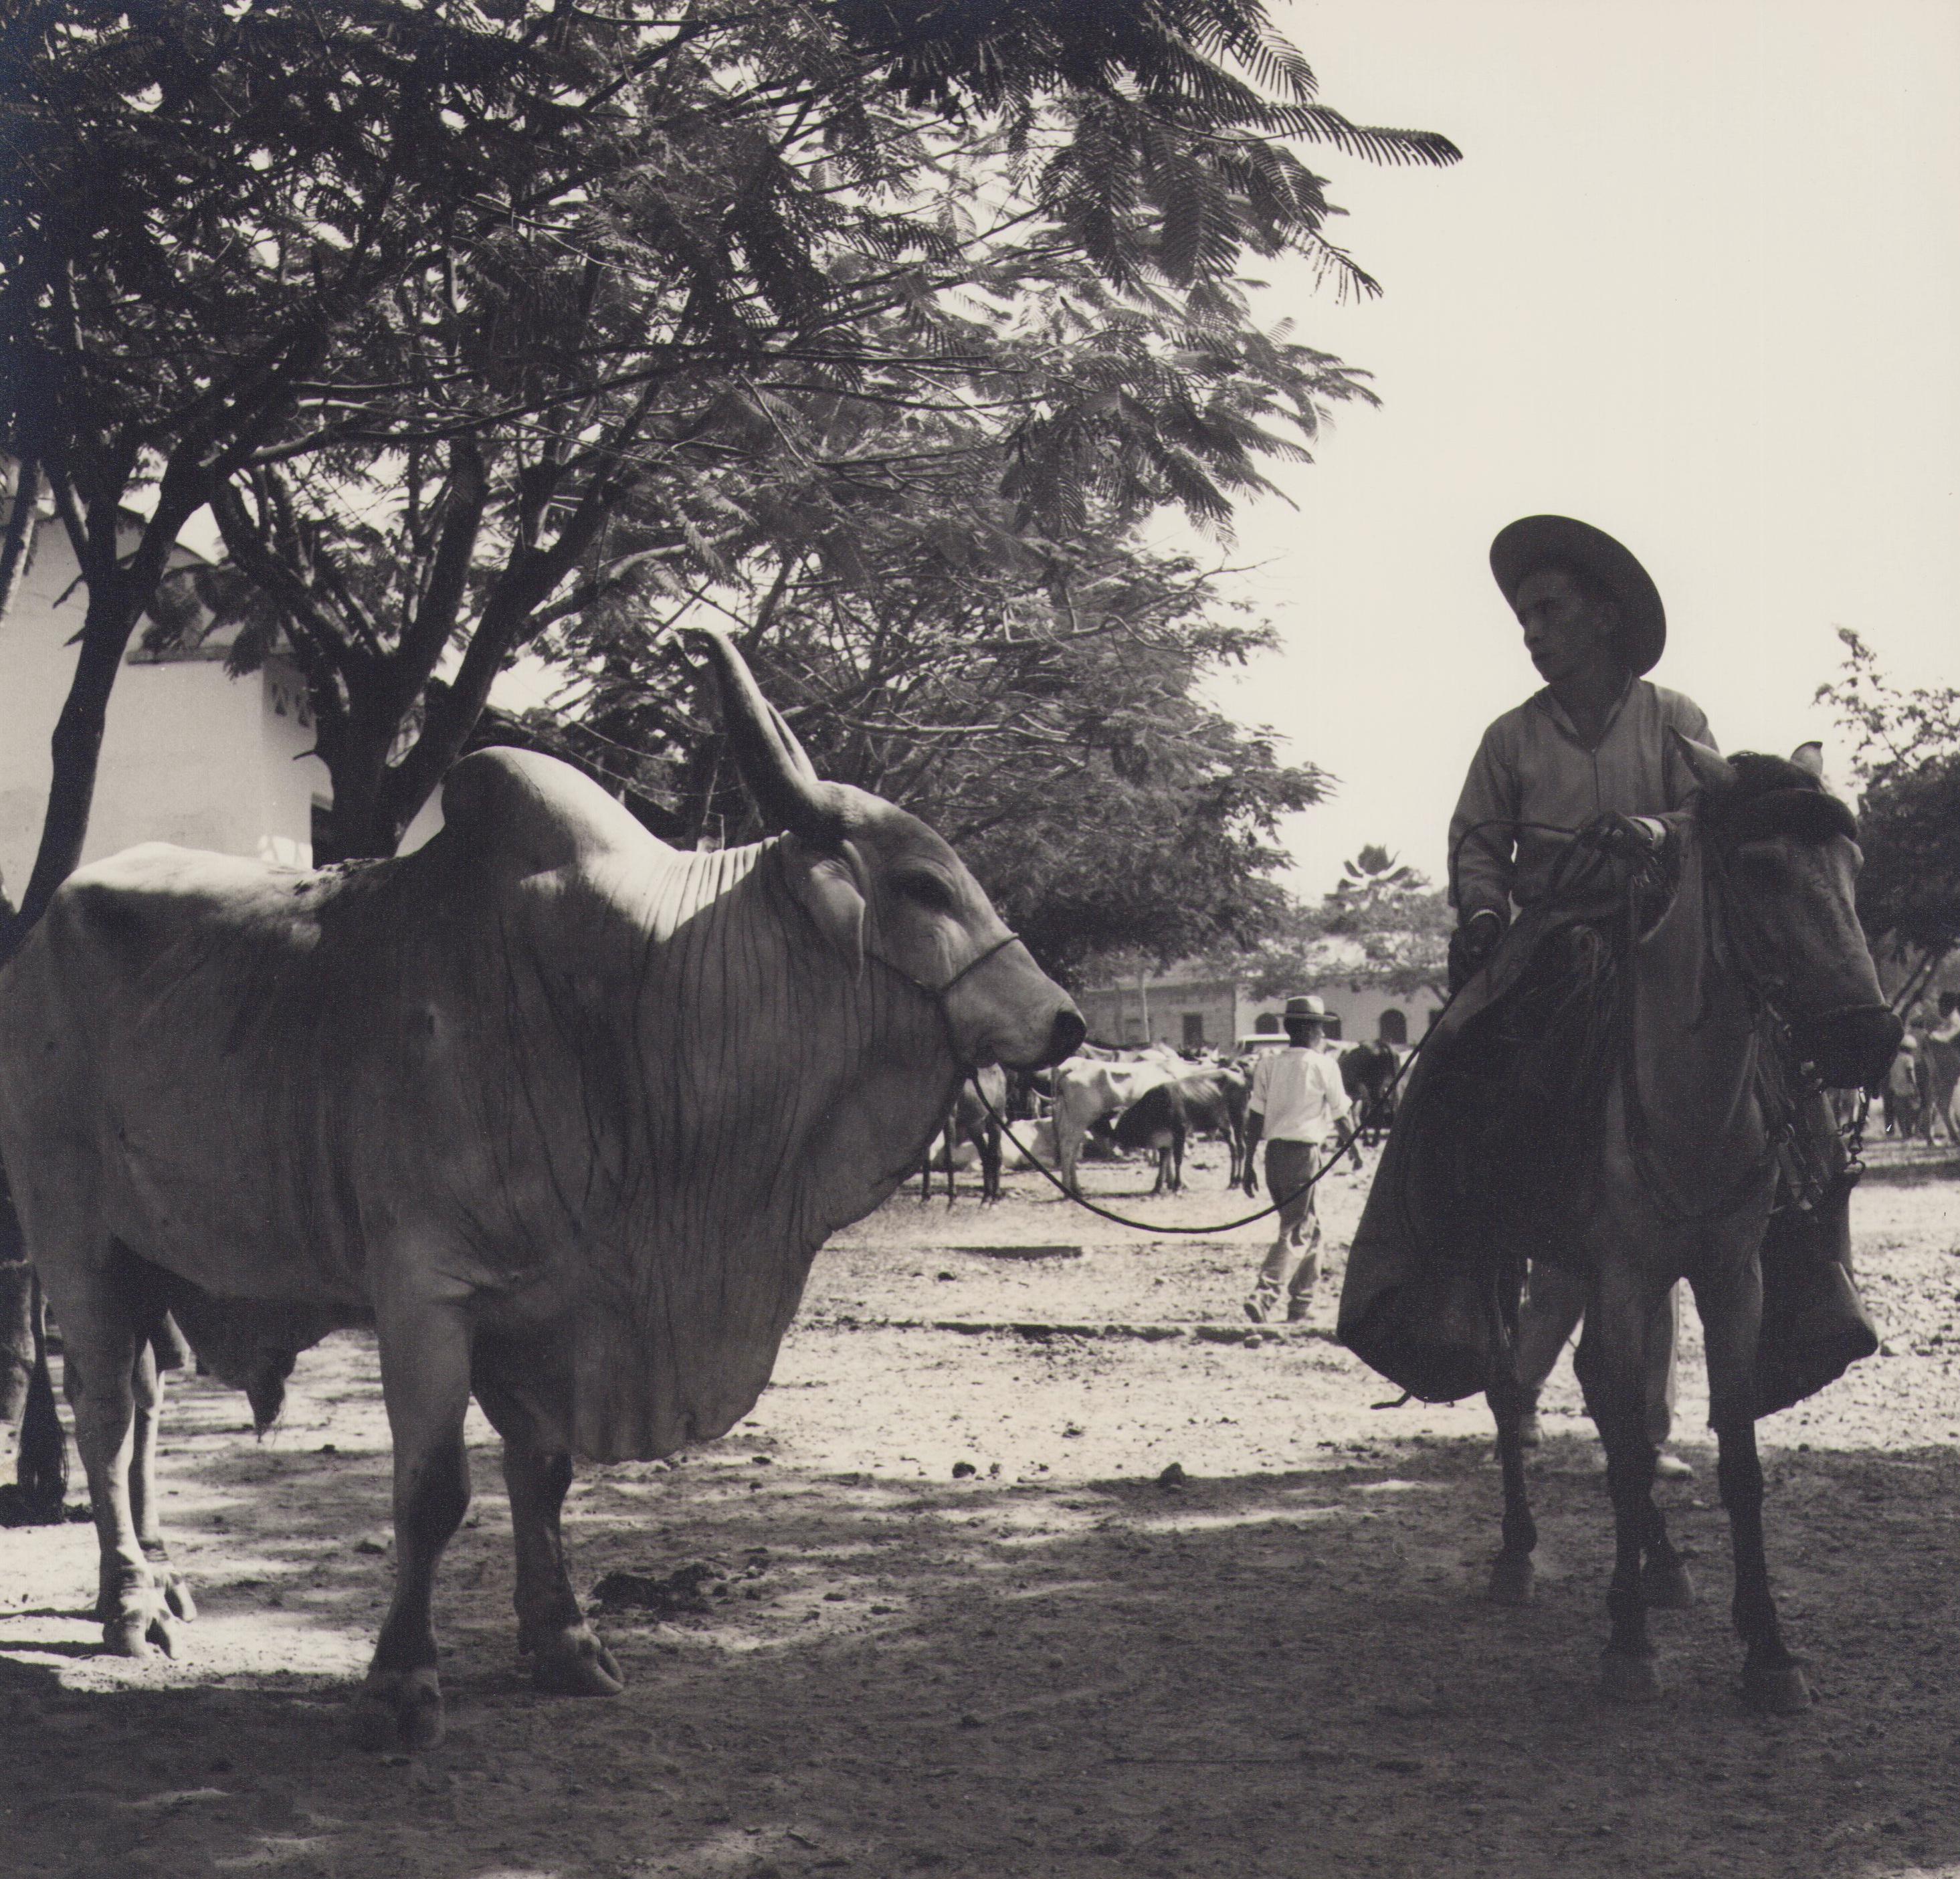 Hanna Seidel Portrait Photograph - Colombia, Zebu bull, Black and White Photography, 1960s, 24, 2 x 25, 2 cm